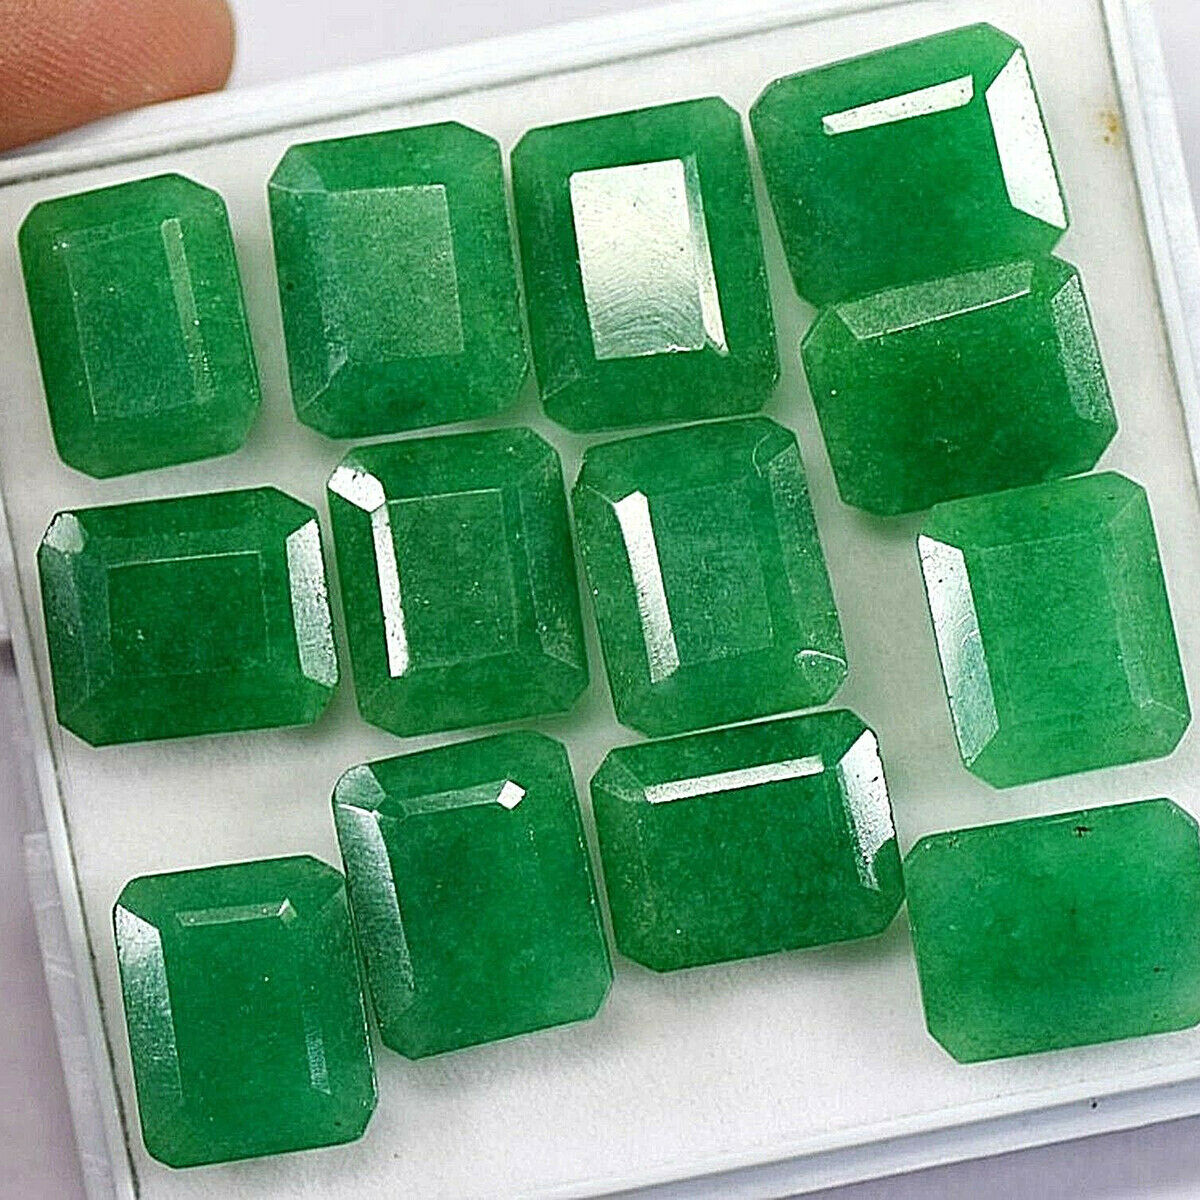 Natural Zambian Green Emerald Cut Faceted Loose Gemstone 150 Ct./13 Pcs Lot